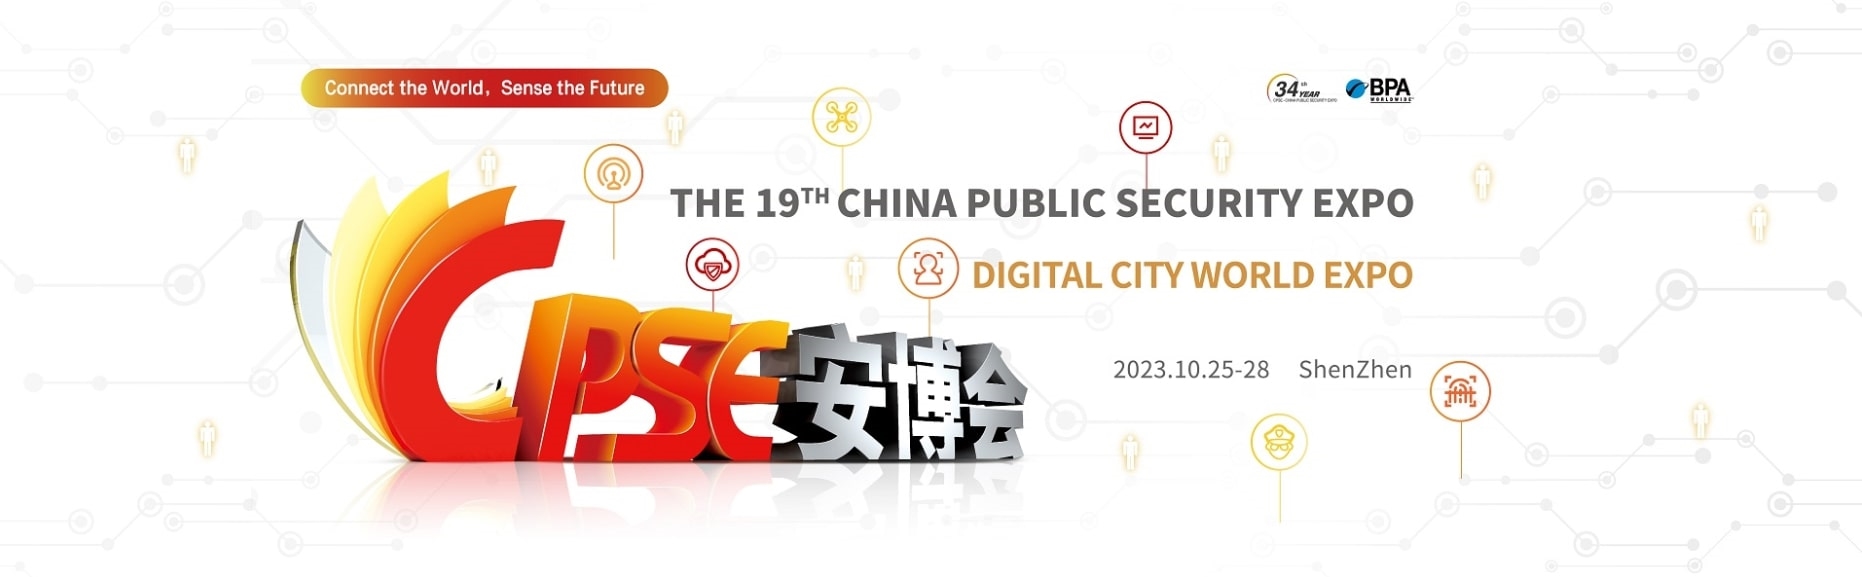 Hội chợ CPSE Security Expo Trung Quốc lần thứ 19